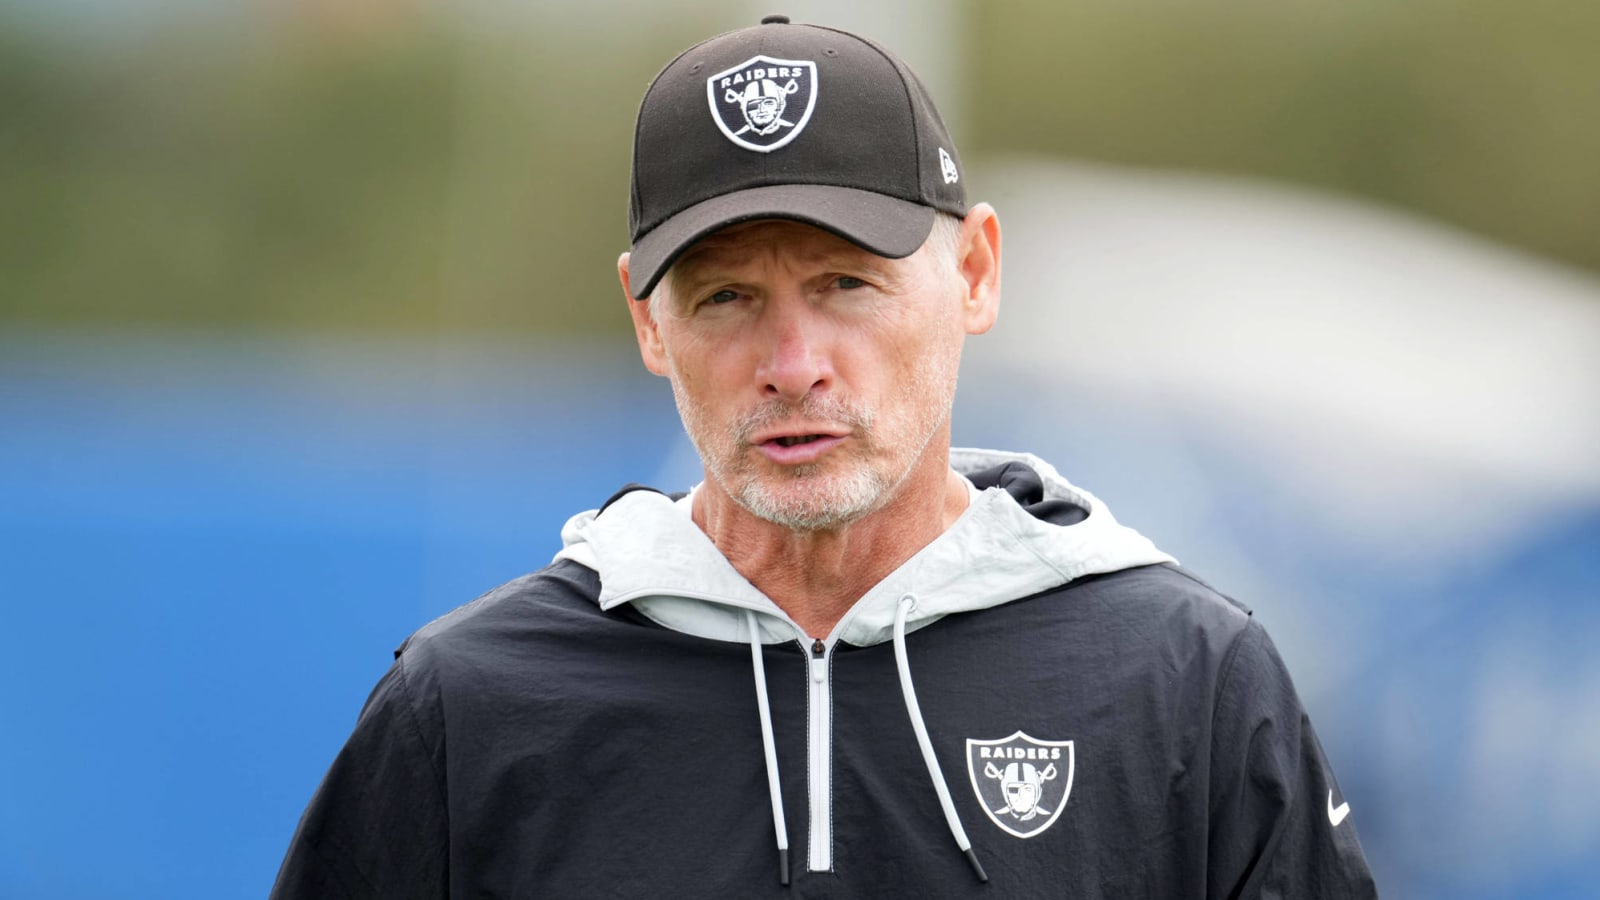 Raiders GM: Team 'needs' to make playoffs this season